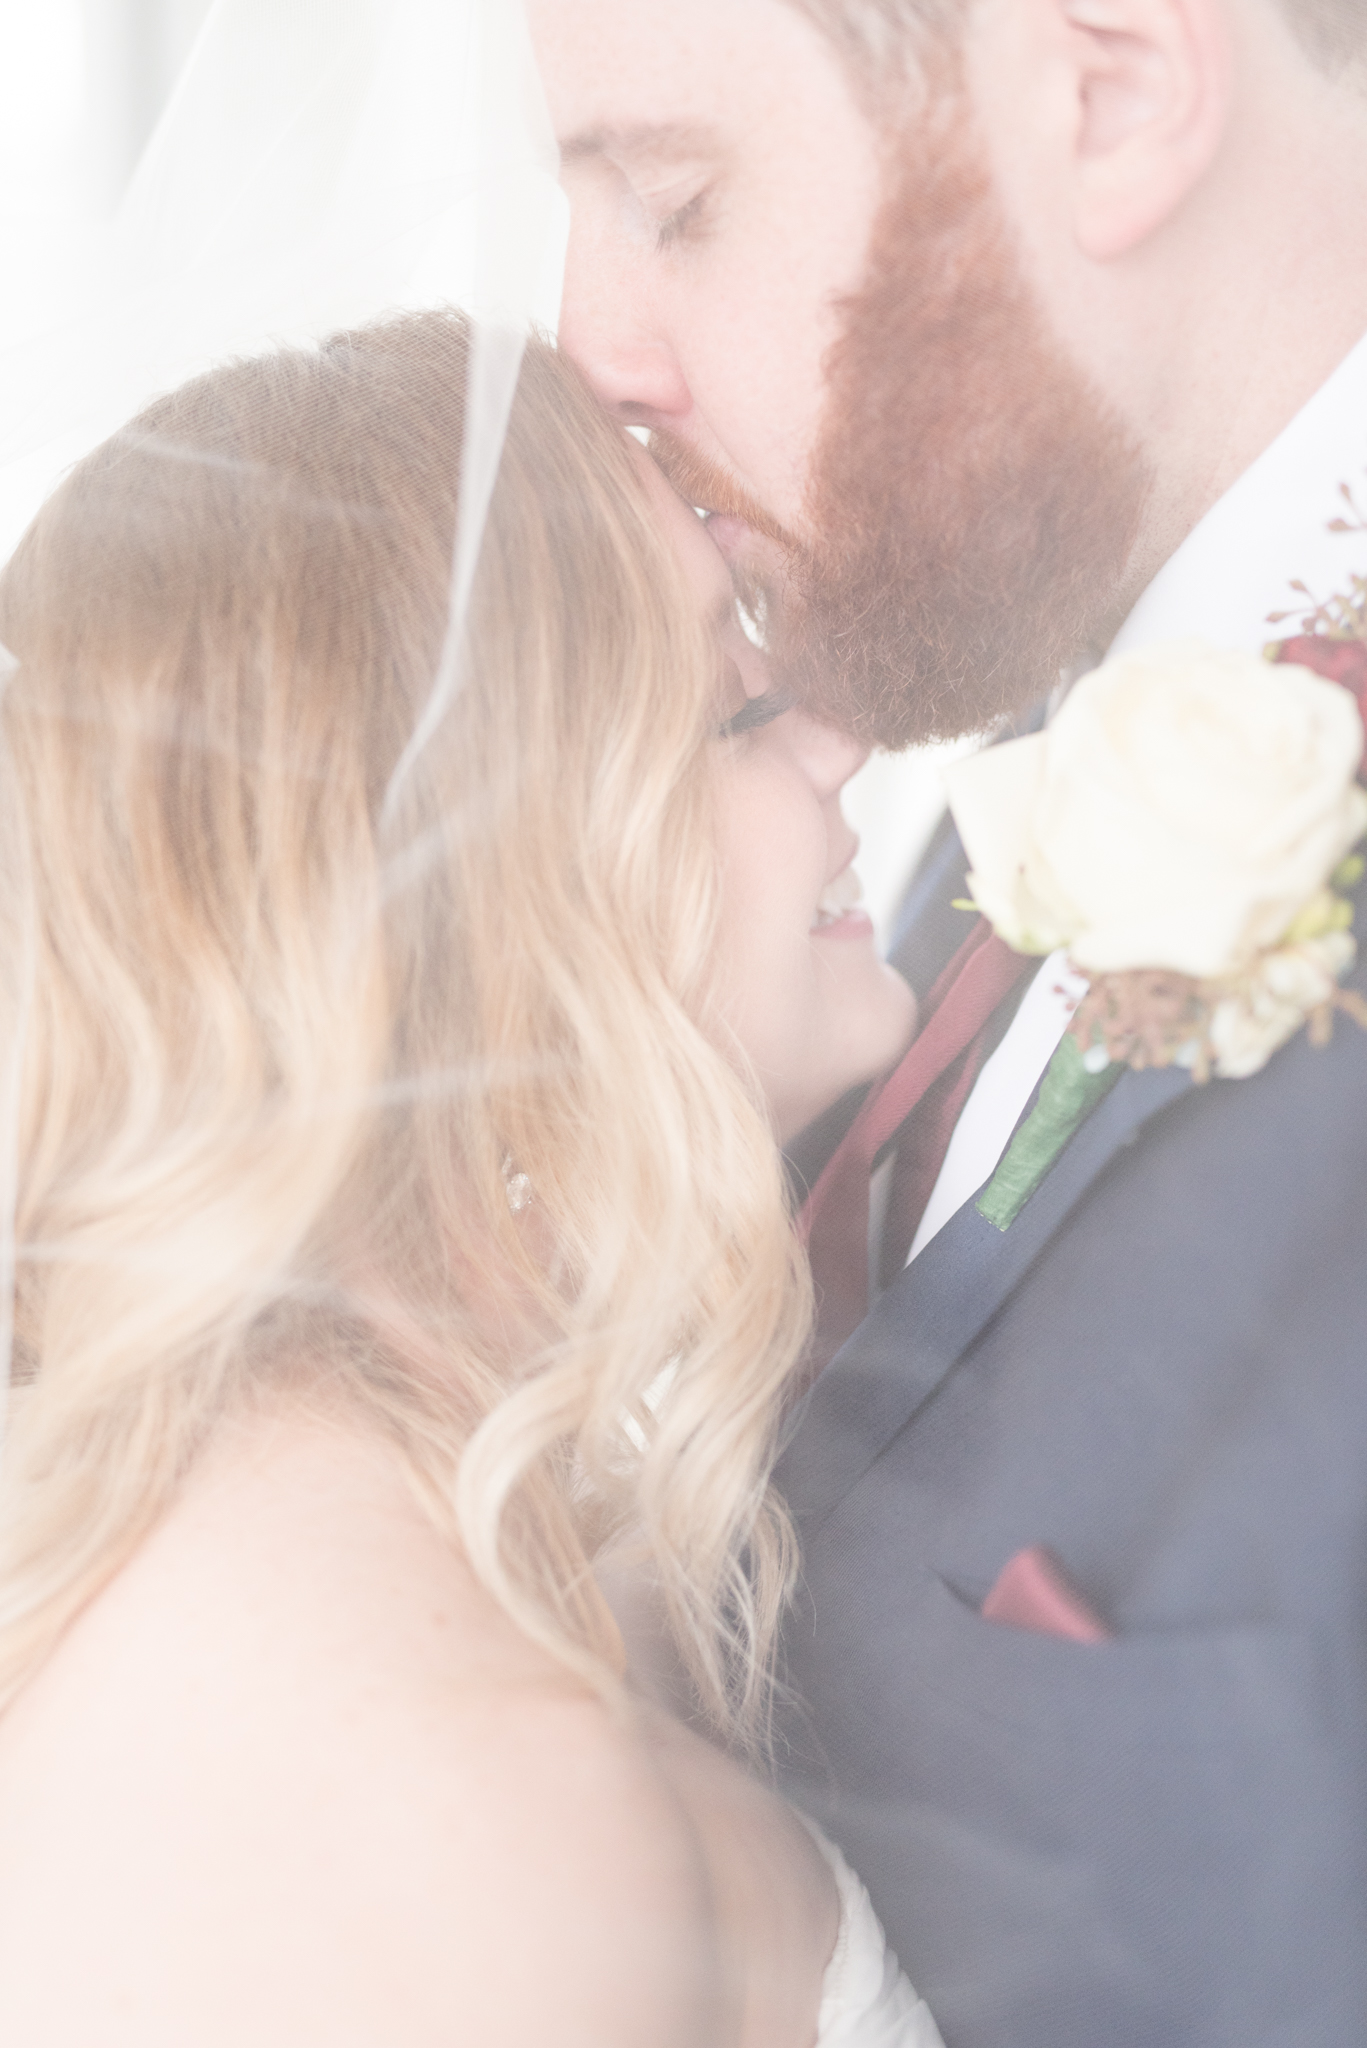 Groom kisses bride's forehead under veil.